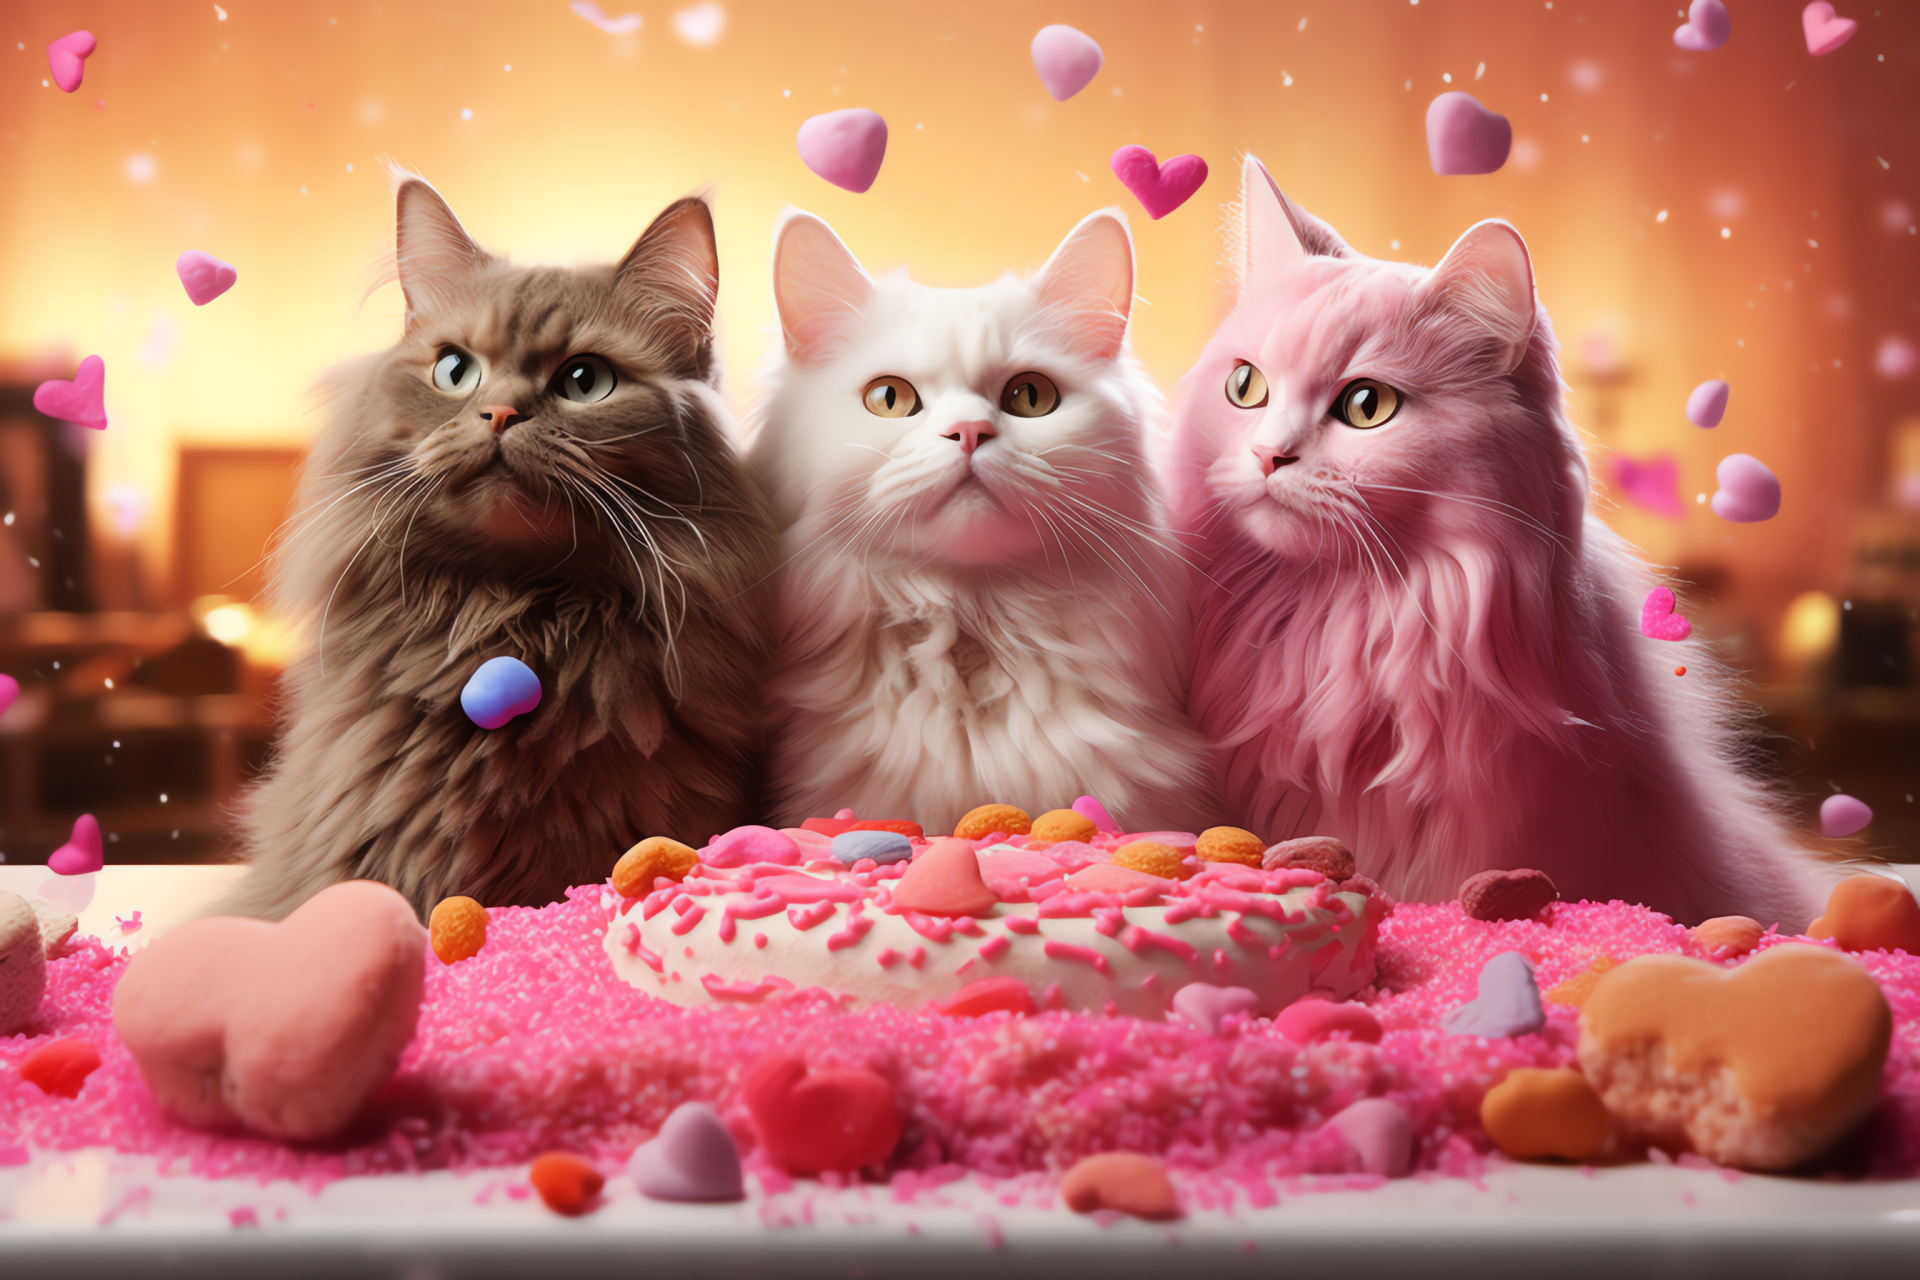 Adorable kitties, Valentine dessert, Sweetheart confectionery, Icing decorations, Romantic treats, HD Desktop Wallpaper